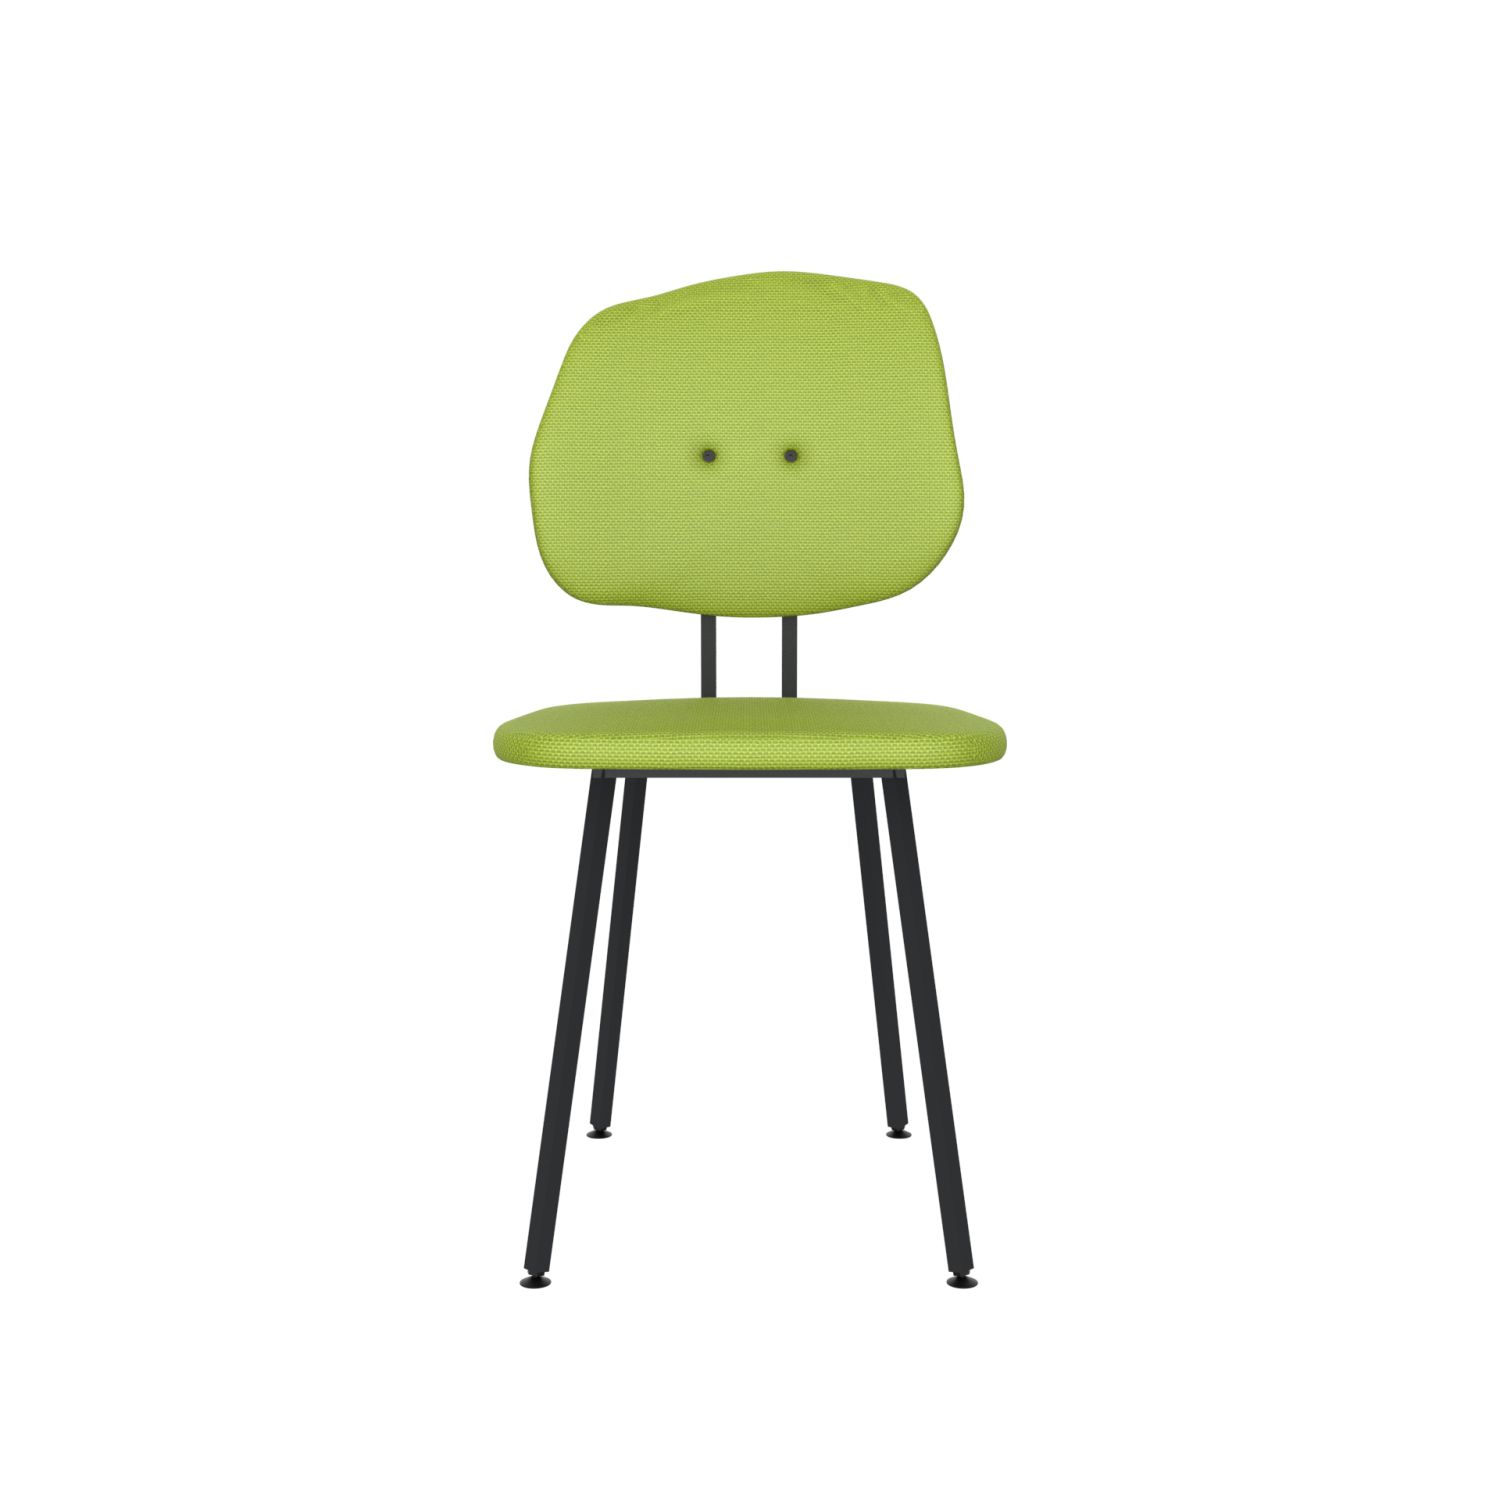 lensvelt maarten baas chair 101 not stackable without armrests backrest g fairway green 020 black ral9005 hard leg ends